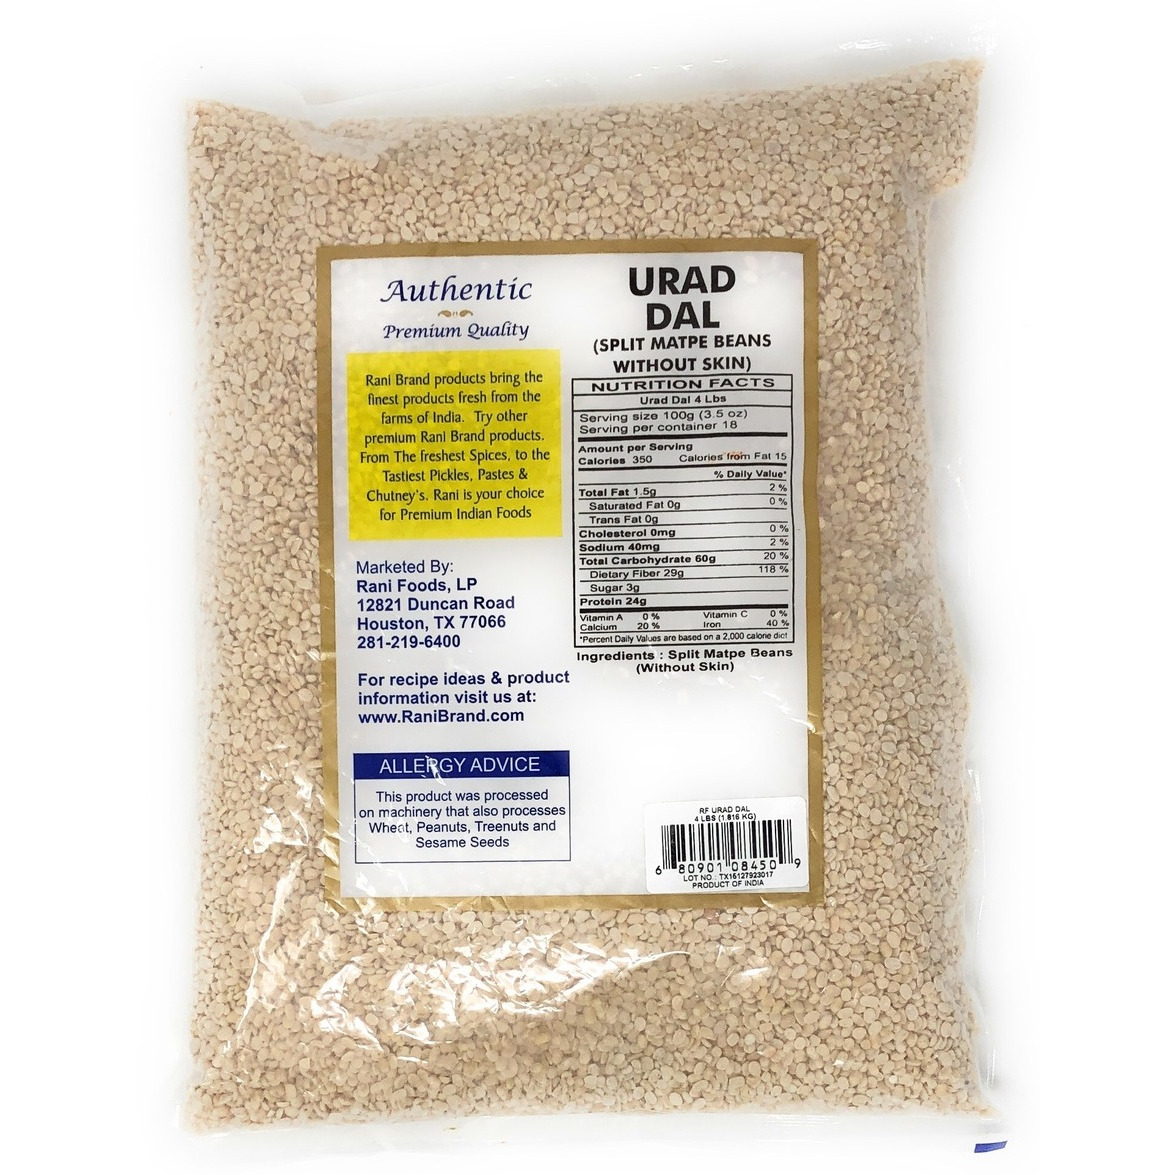 Rani Urid / Urad Dal (Split Matpe Beans without Skin) Indian Lentils 4lb (64oz) ~ All Natural | Indian Origin | Gluten Friendly | NON-GMO | Vegan